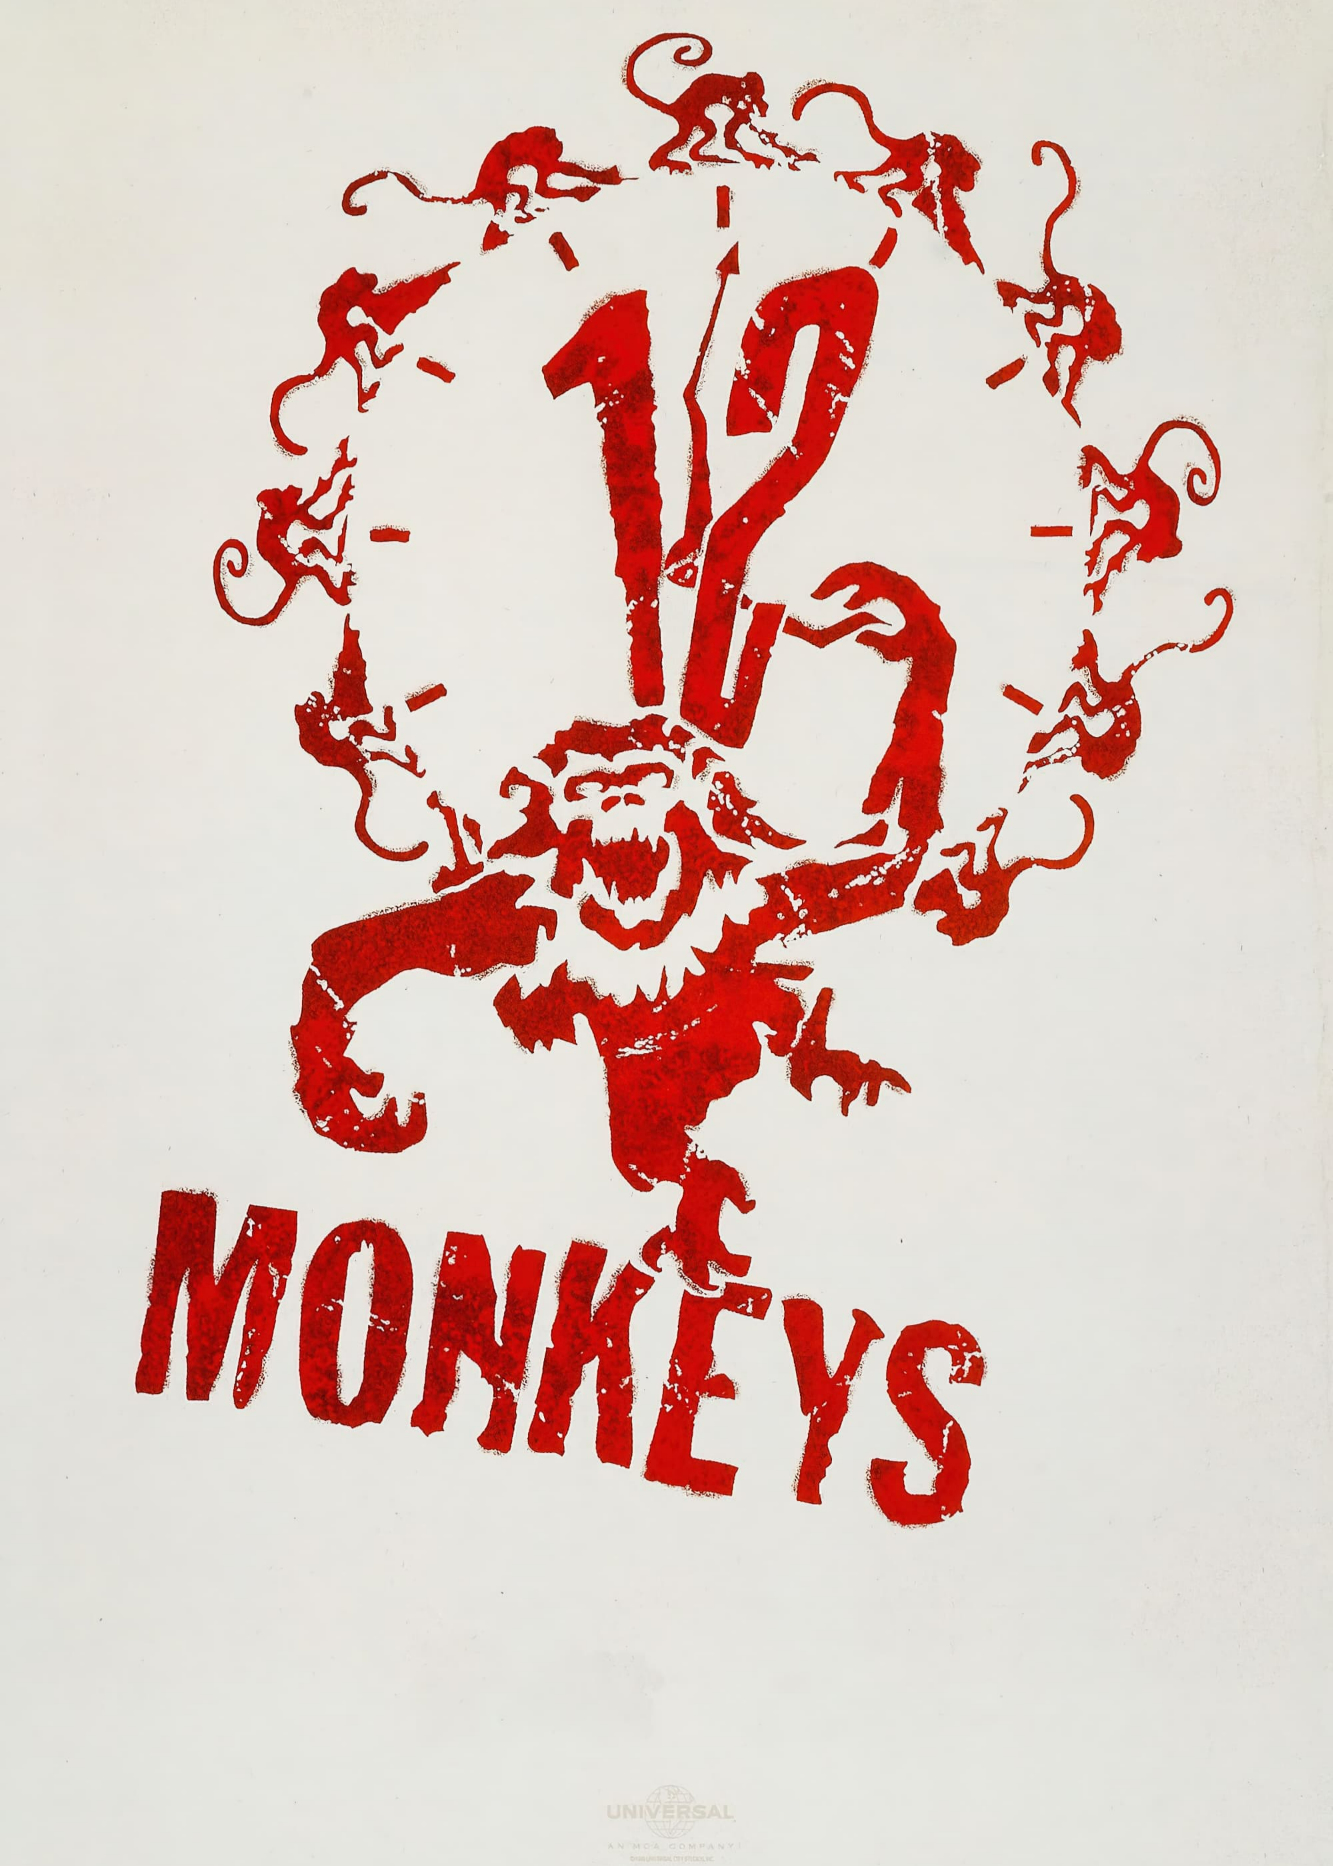 Poster Phim 12 Monkeys (12 Monkeys)